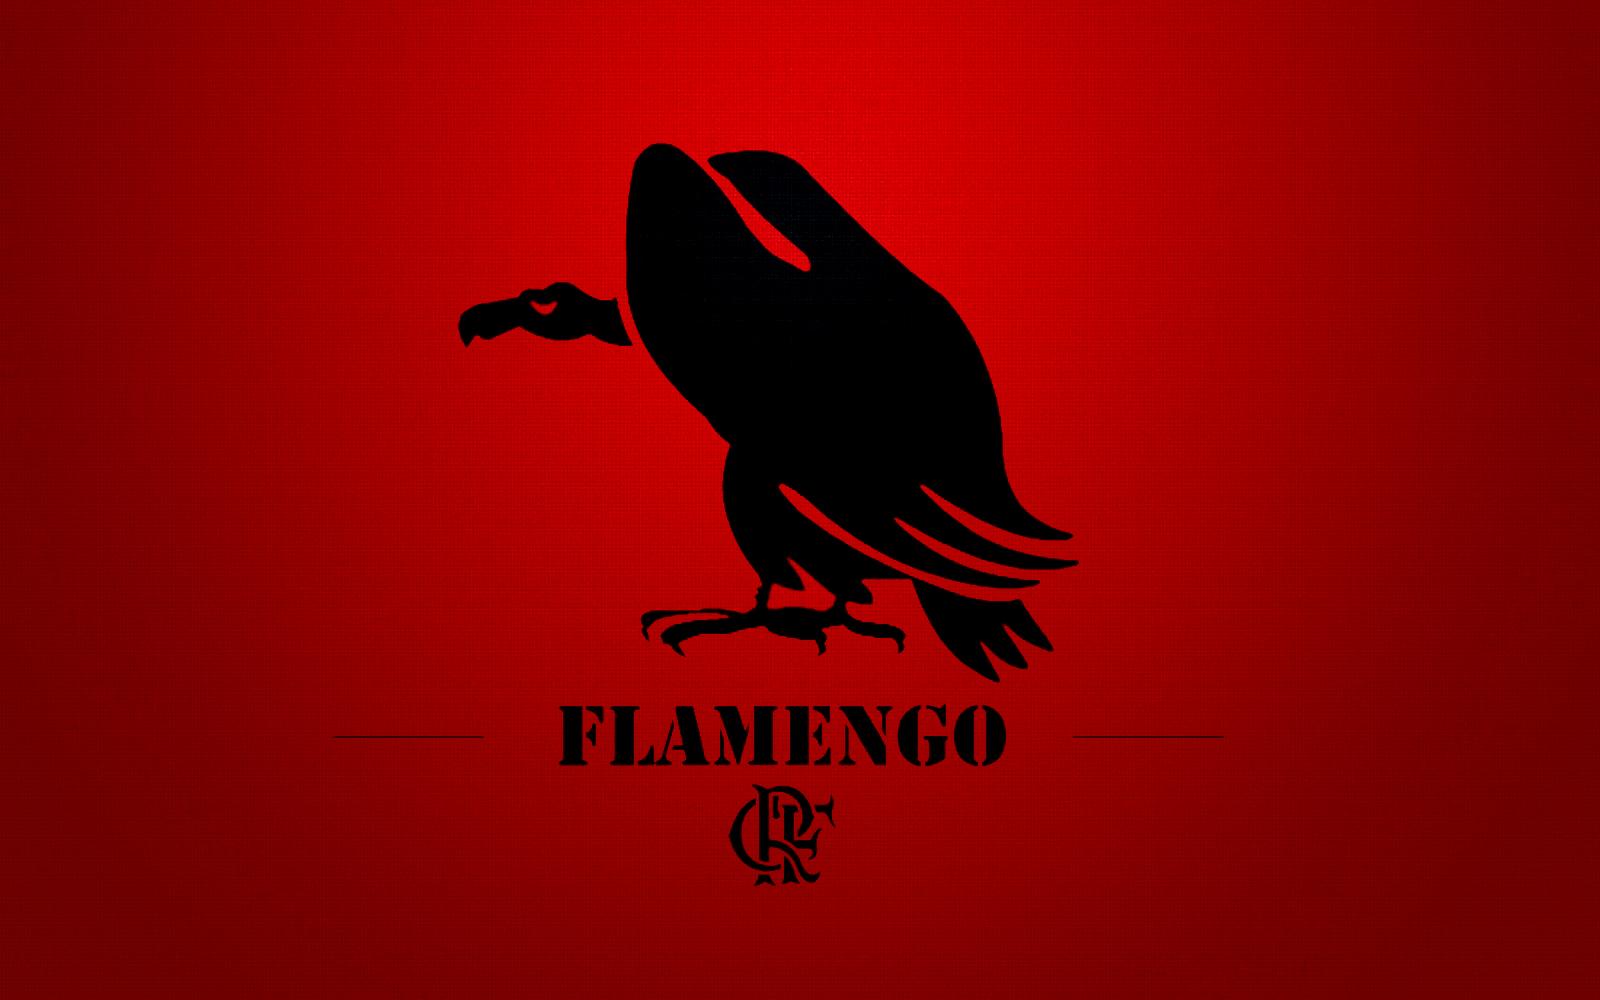 Clube De Regatas Do Flamengo at 320 x 480 iPhone size wallpapers HD quality